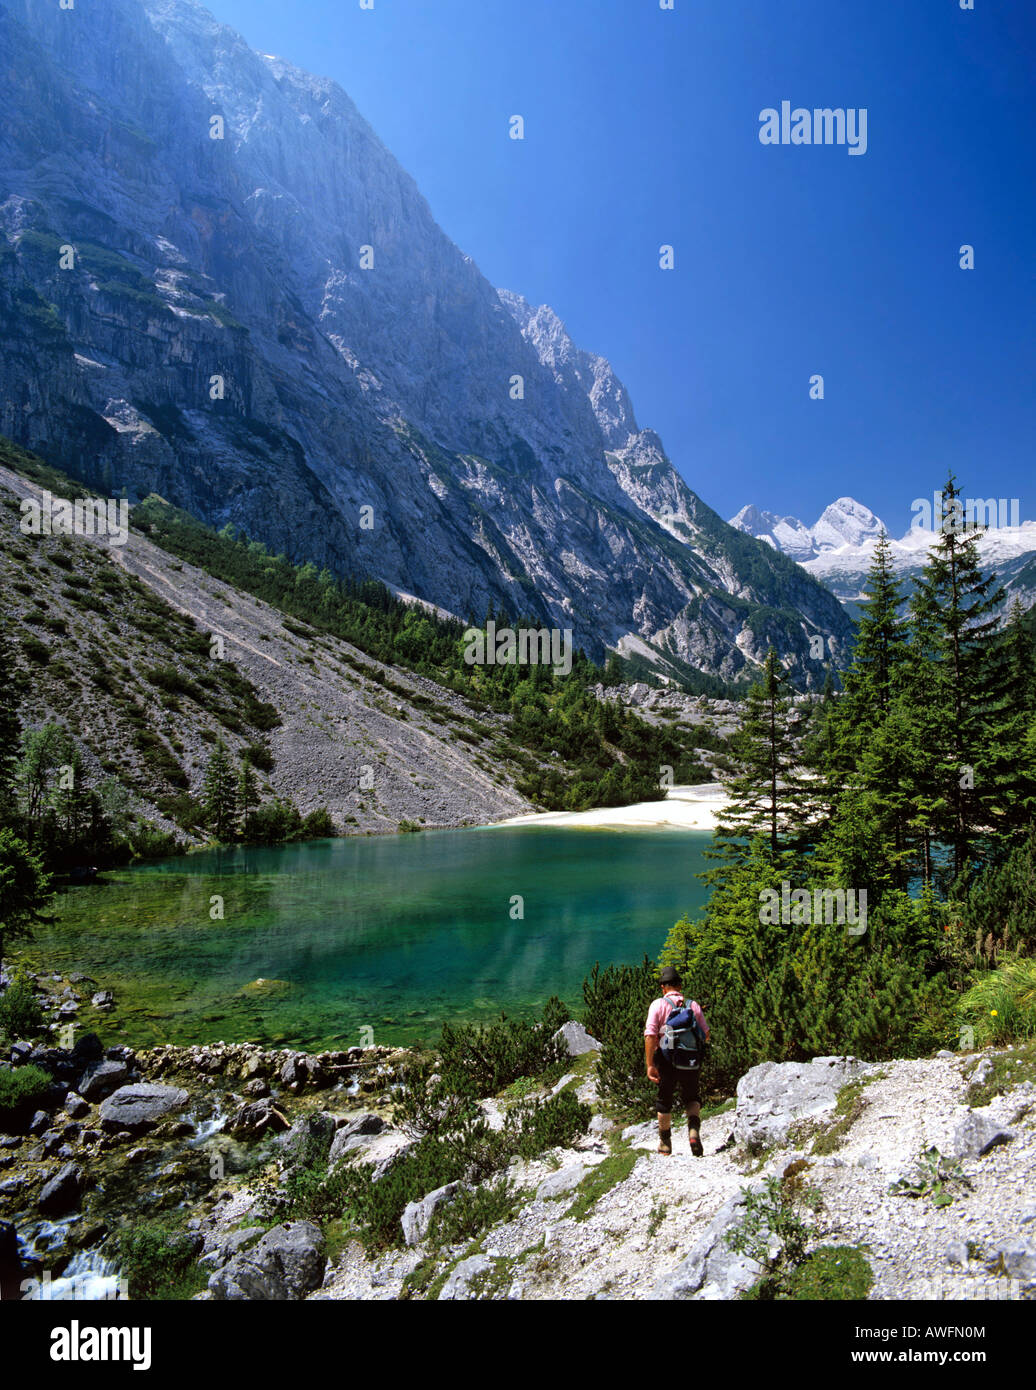 Hiker standing in front of the Blaue Gumpe alpine lake, Wetterstein Range, Upper Bavaria, Bavaria, Germany, Europe Stock Photo